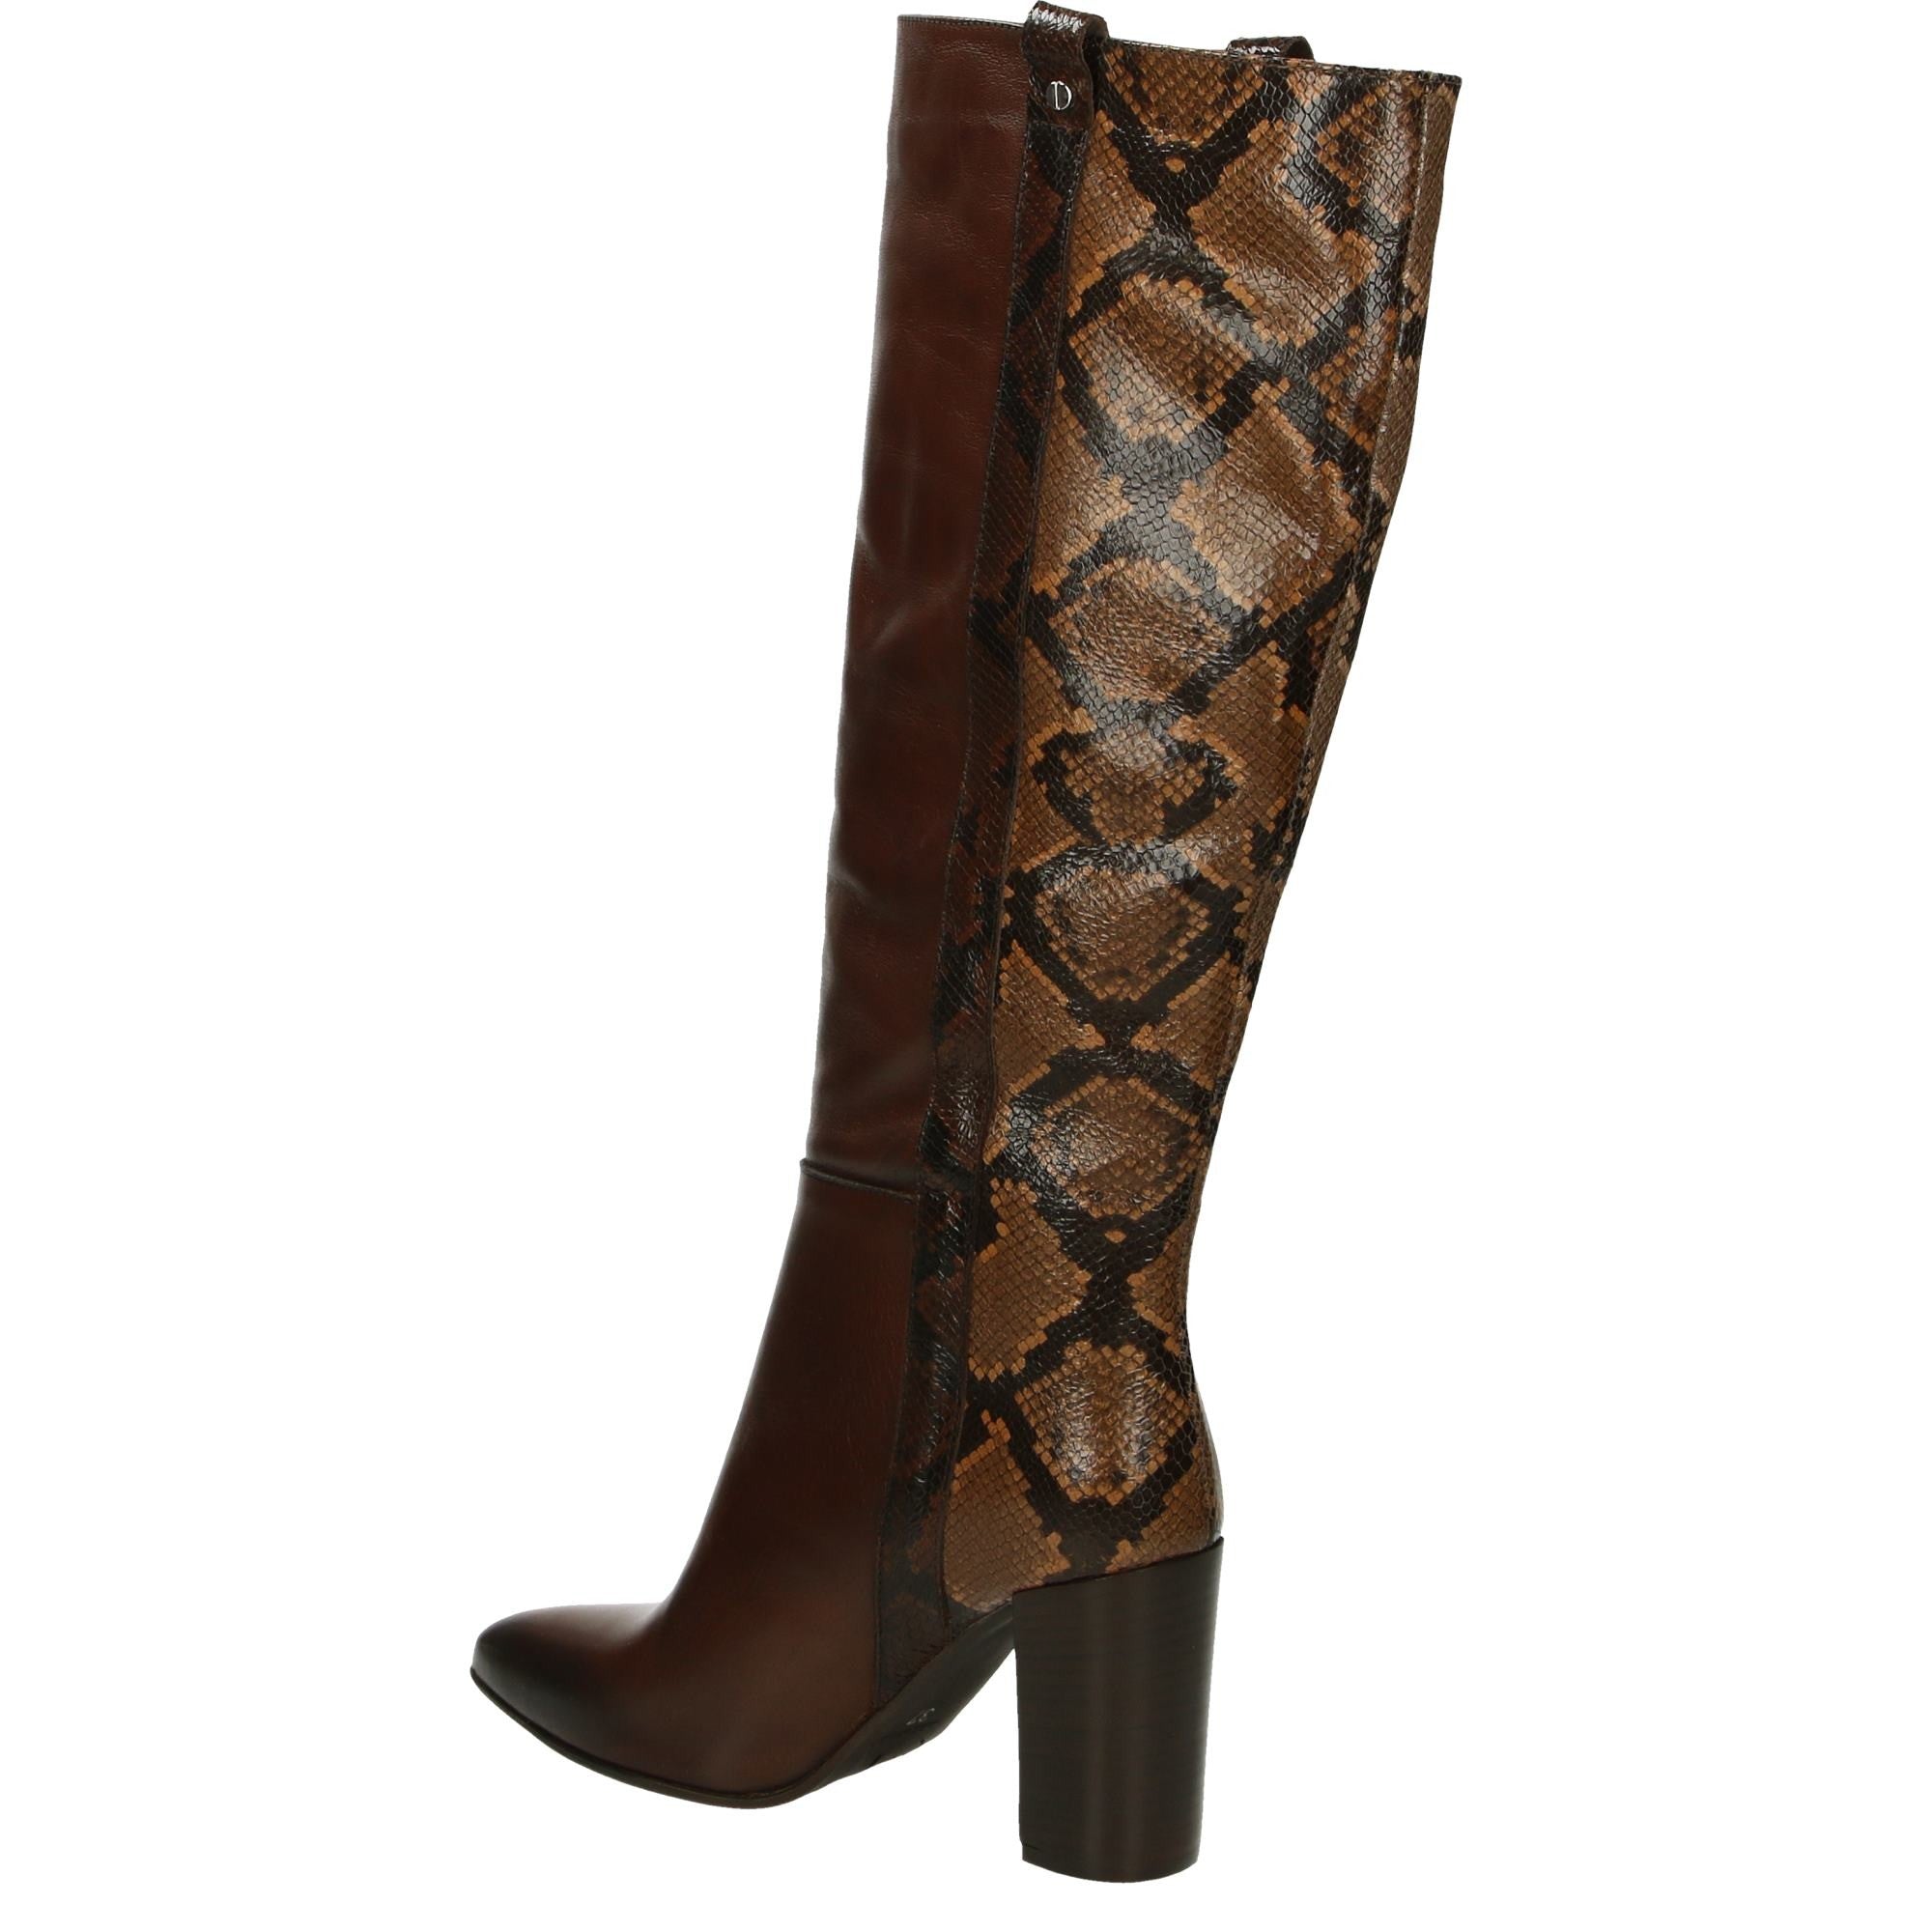 snakeskin boots long